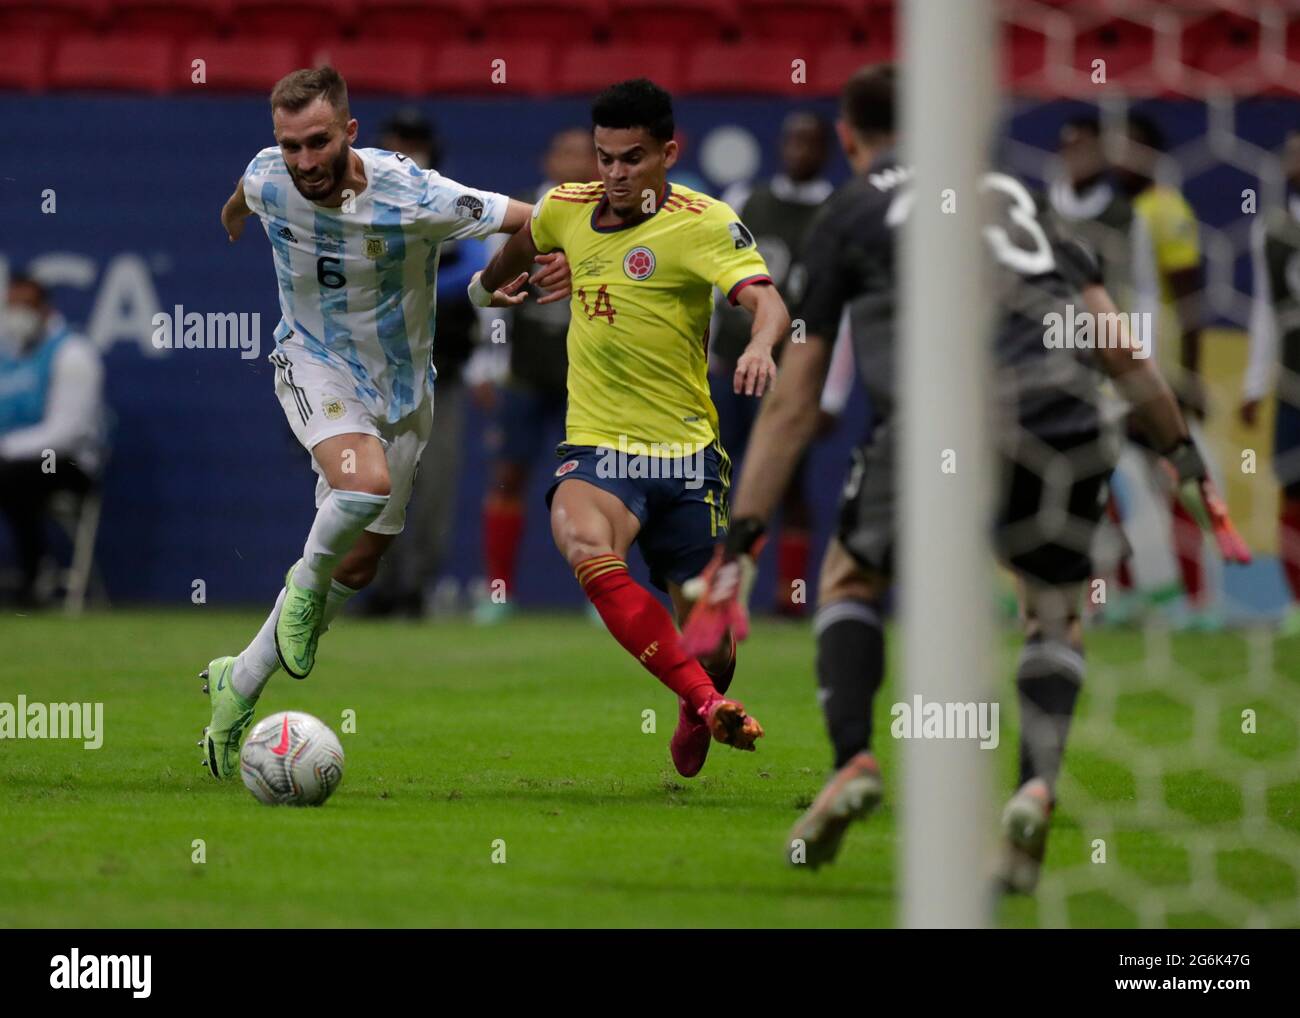 Skor argentina vs colombia copa america 2021